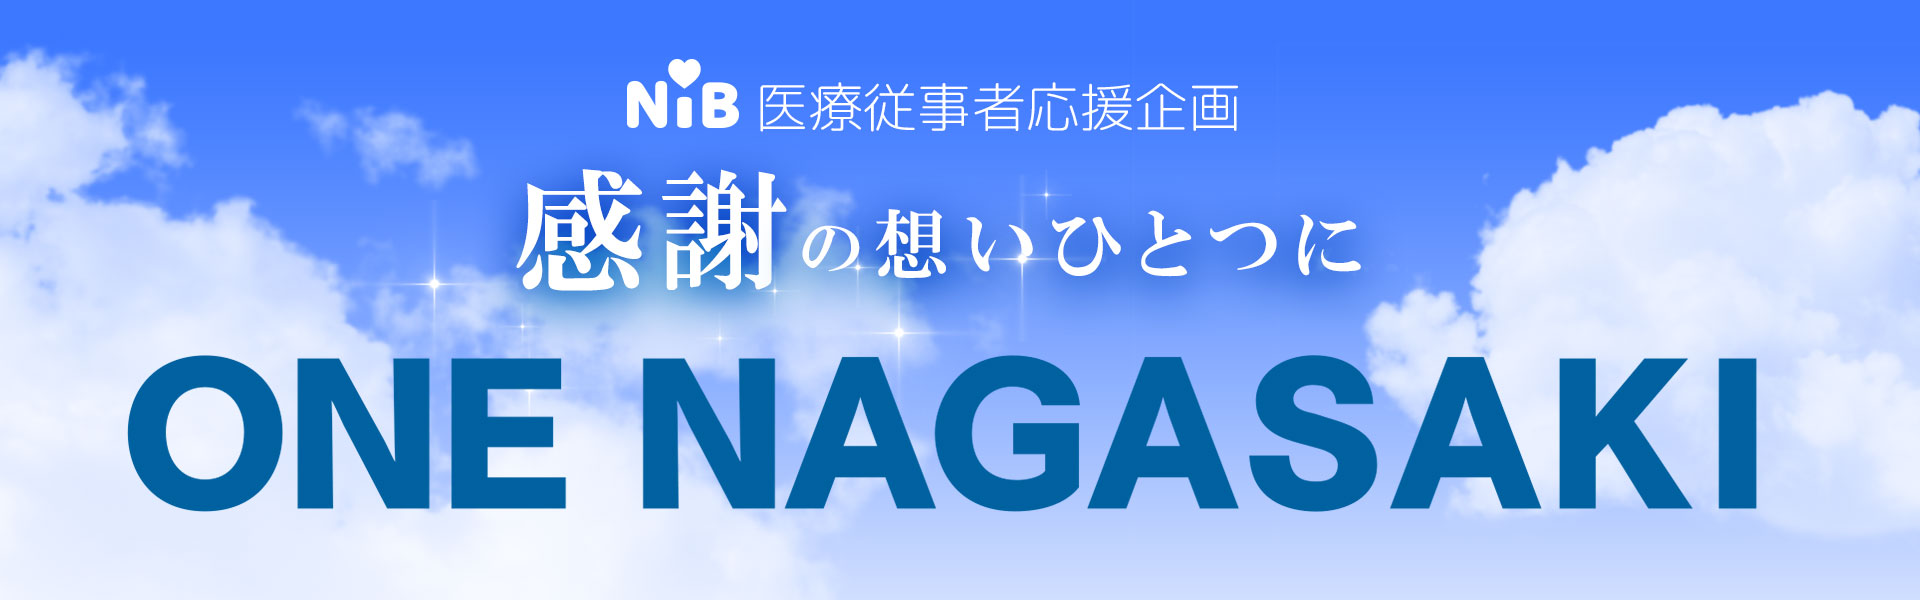 NIB医療従事者応援企画　感謝の想いひとつに「ONE NAGASAKI」